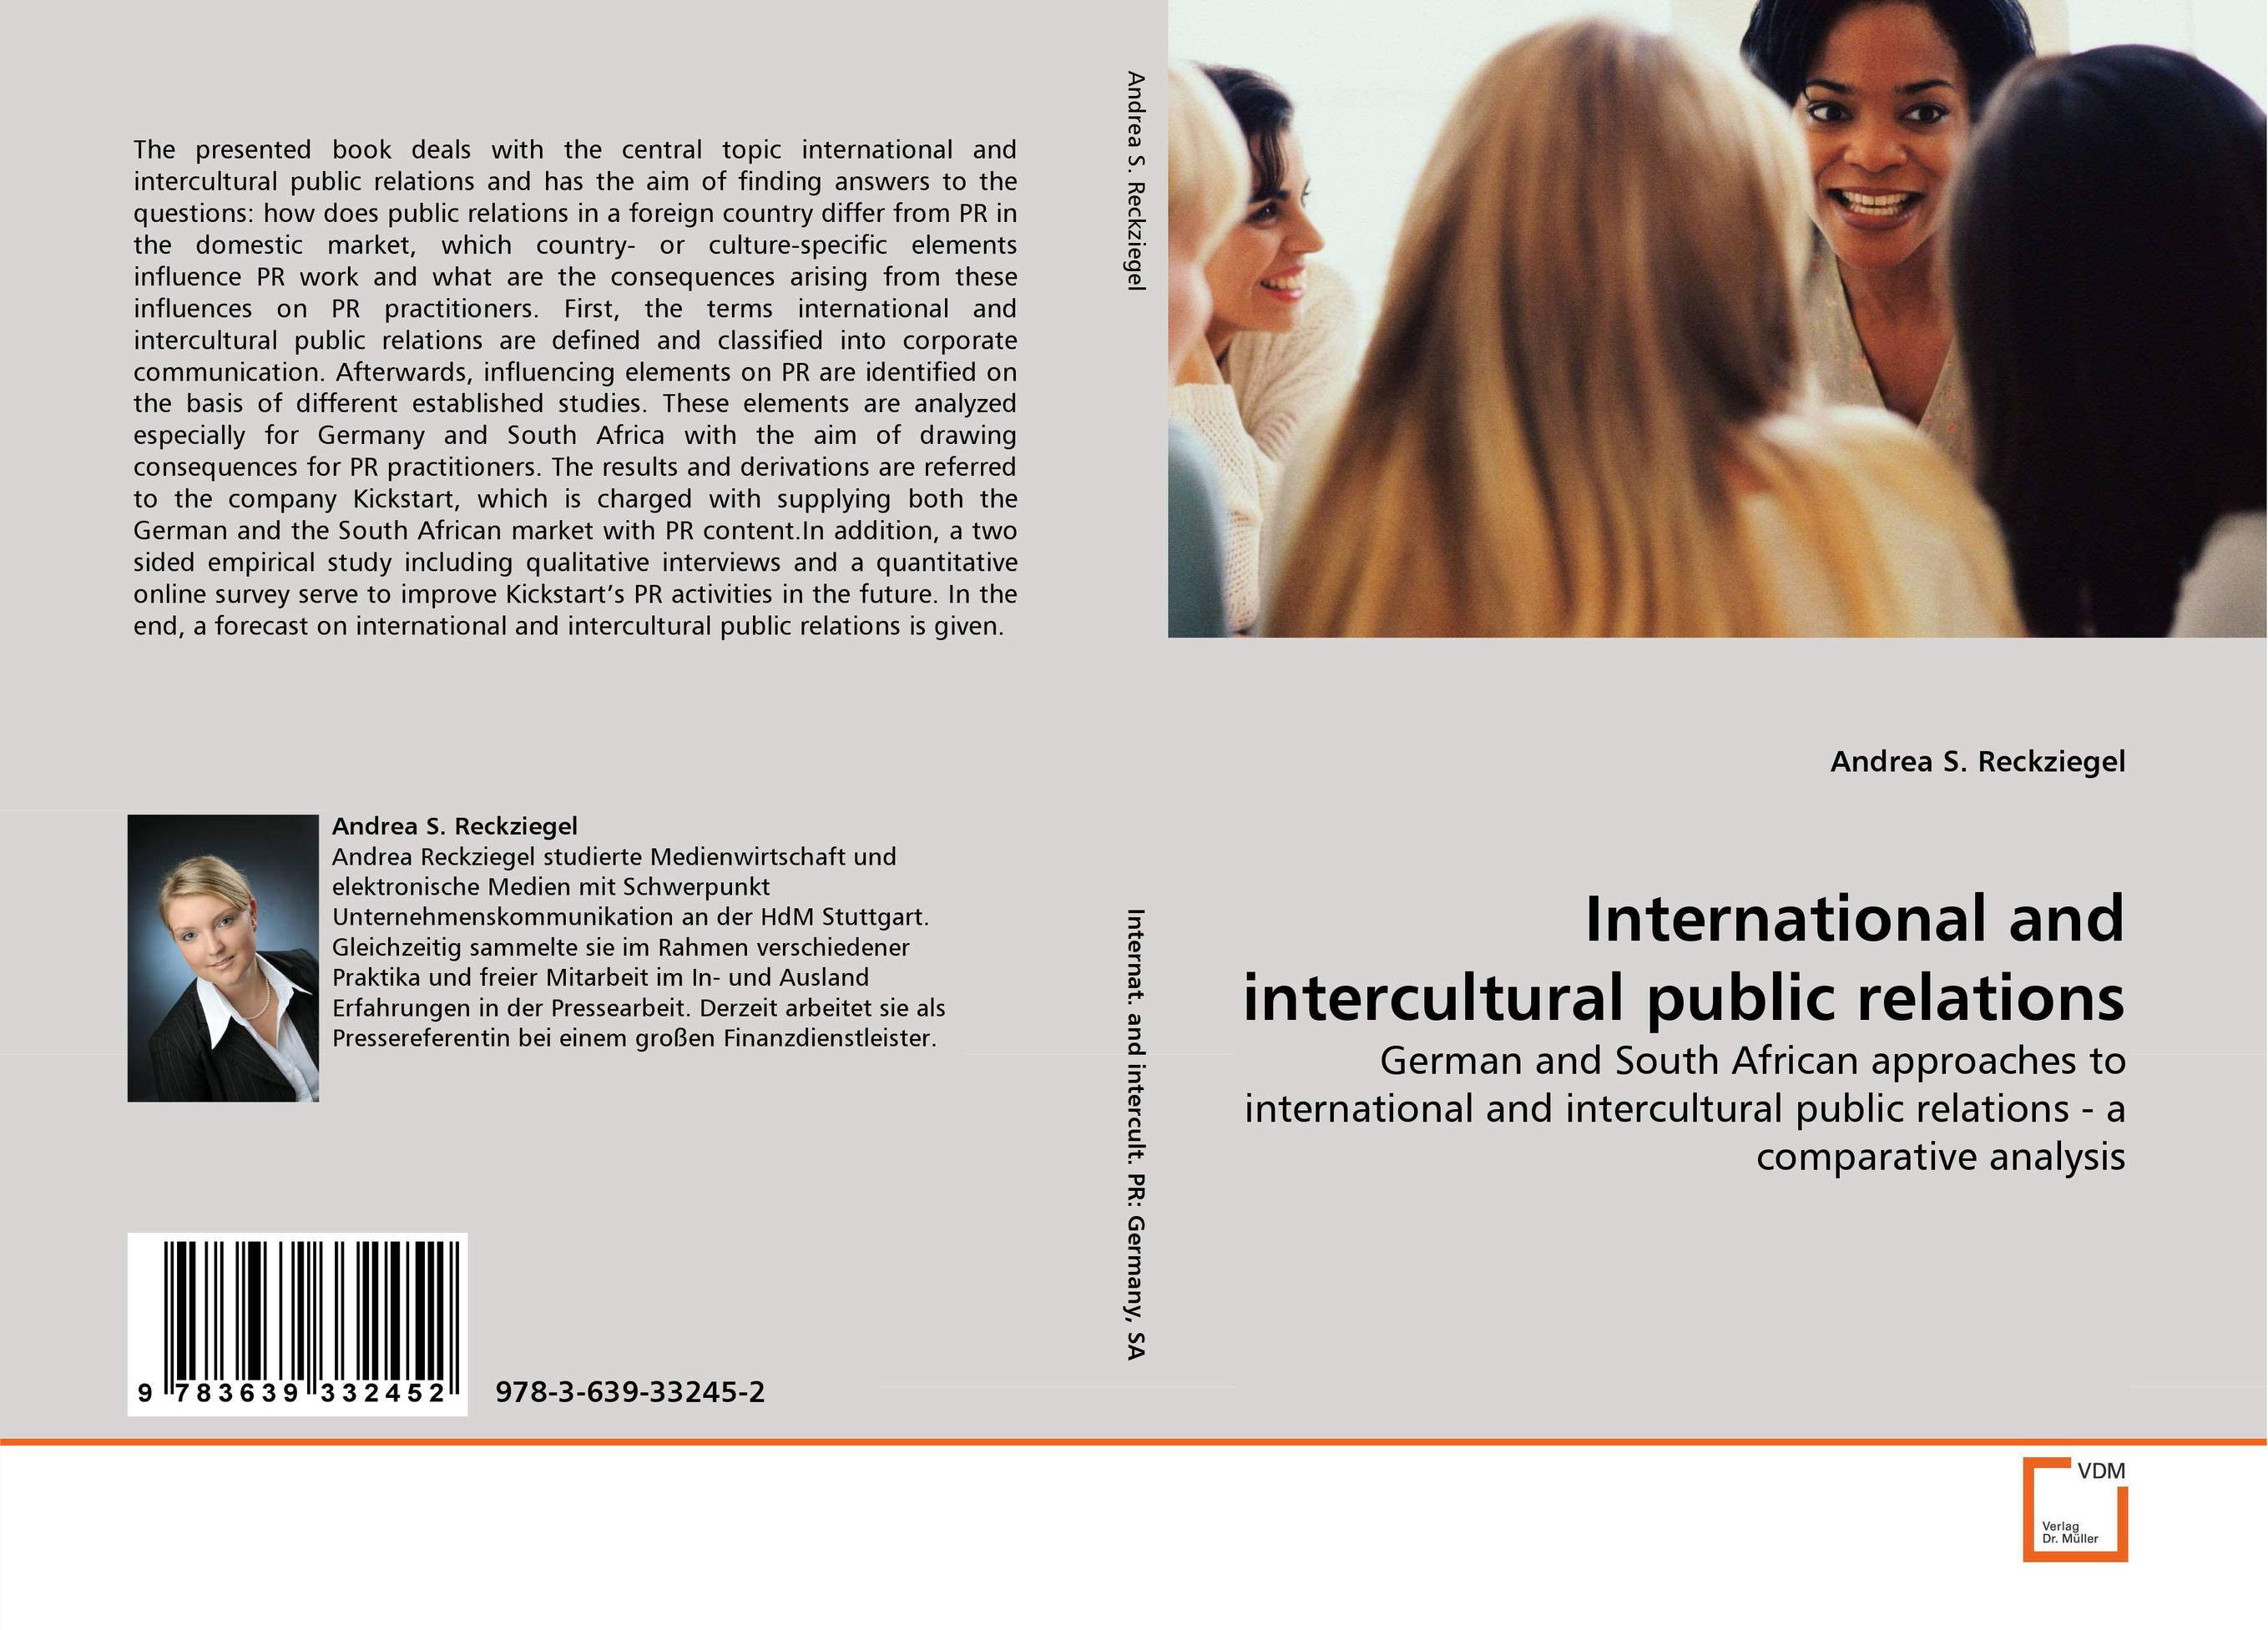 International and intercultural public relations